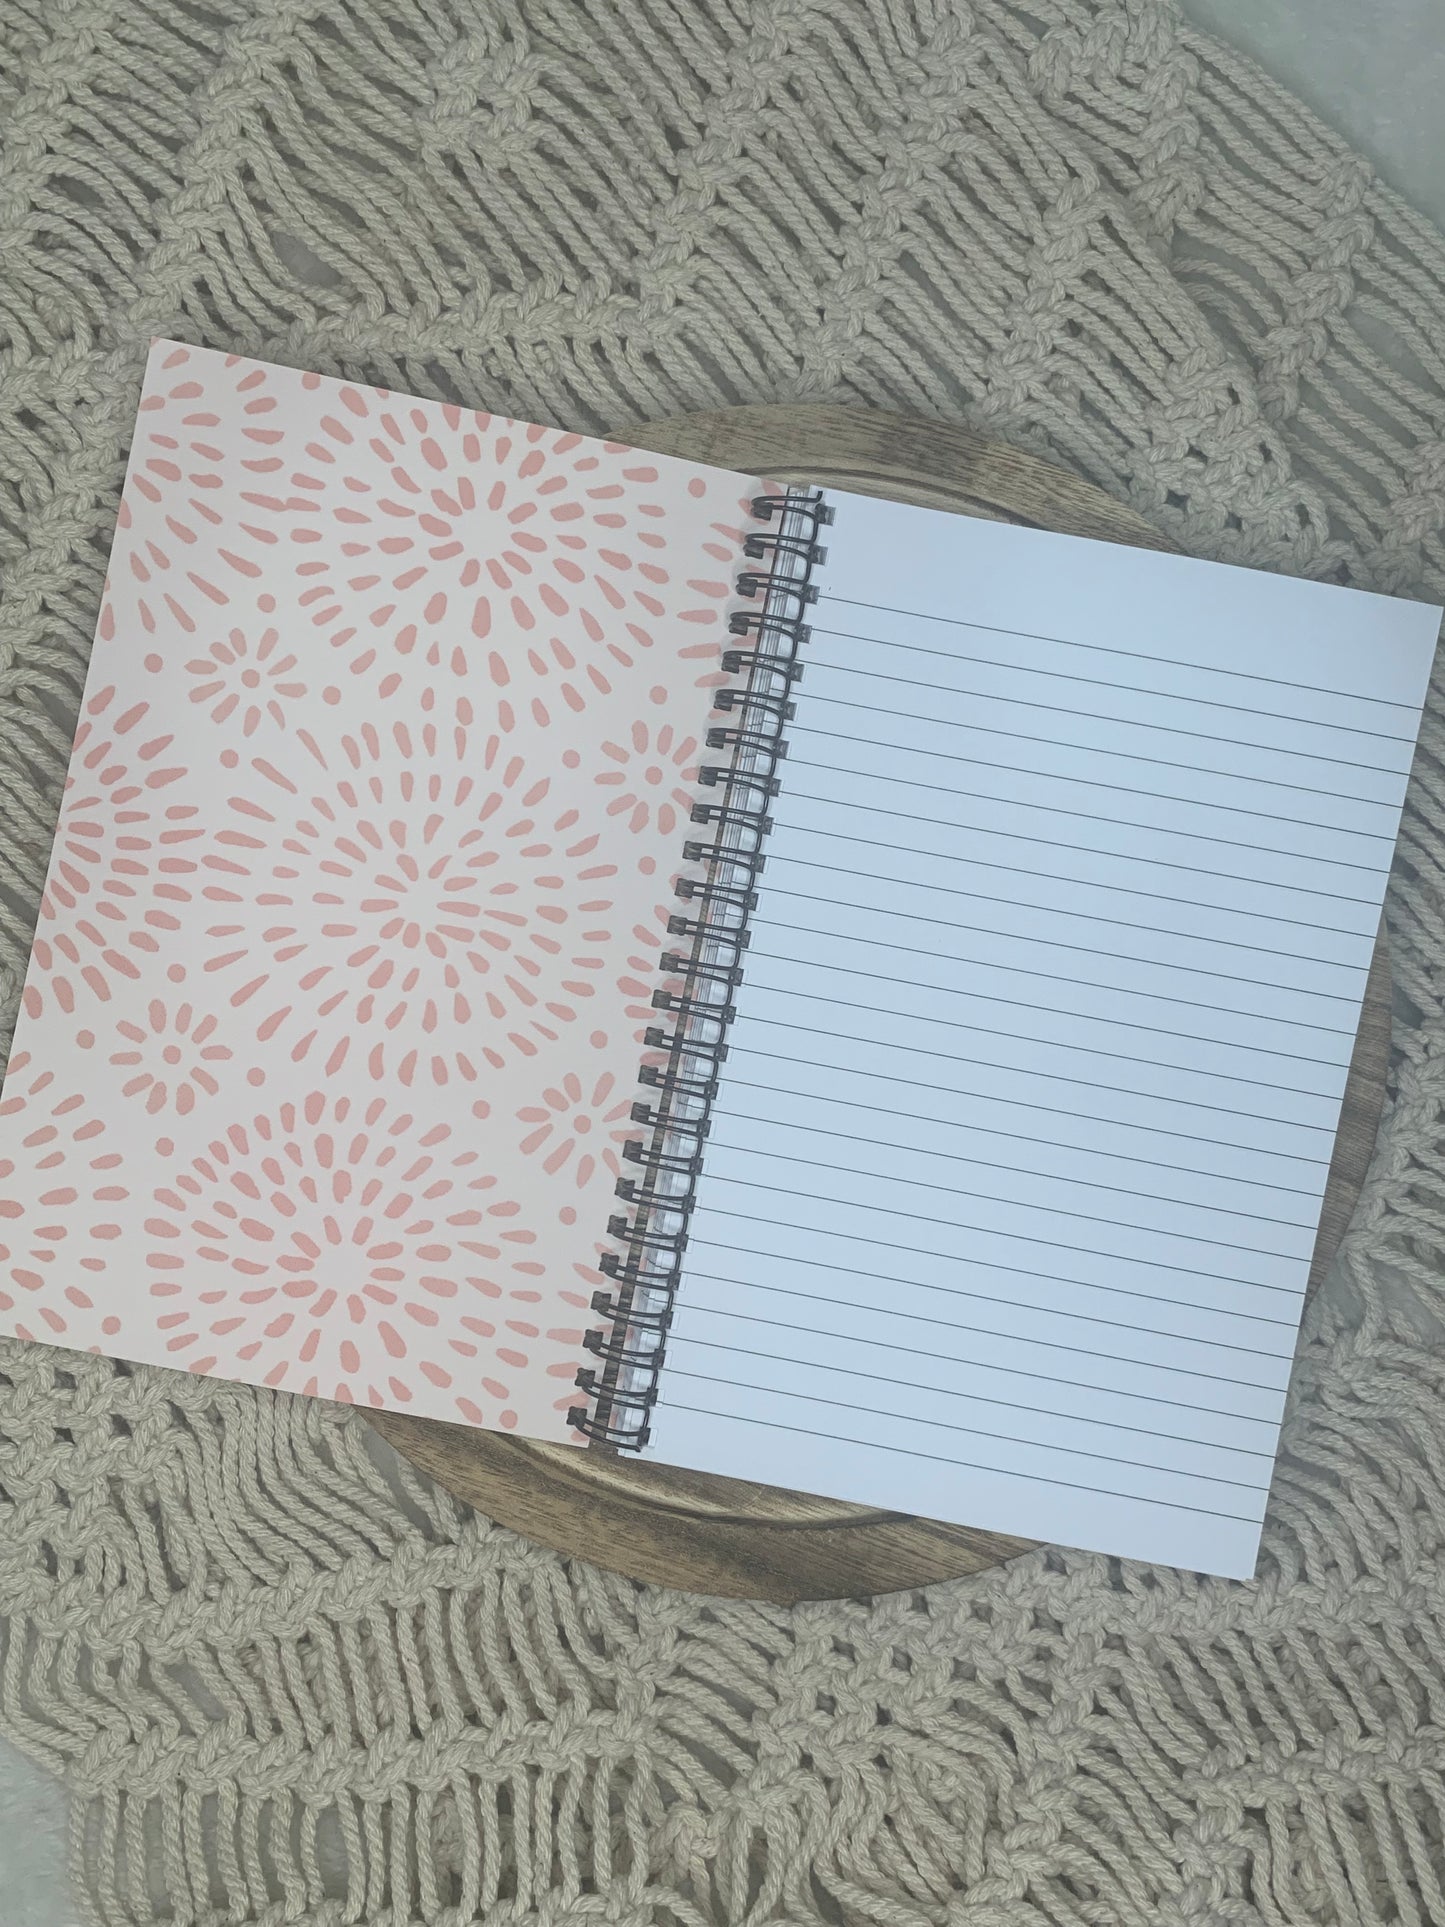 Faith Spiral Notebook